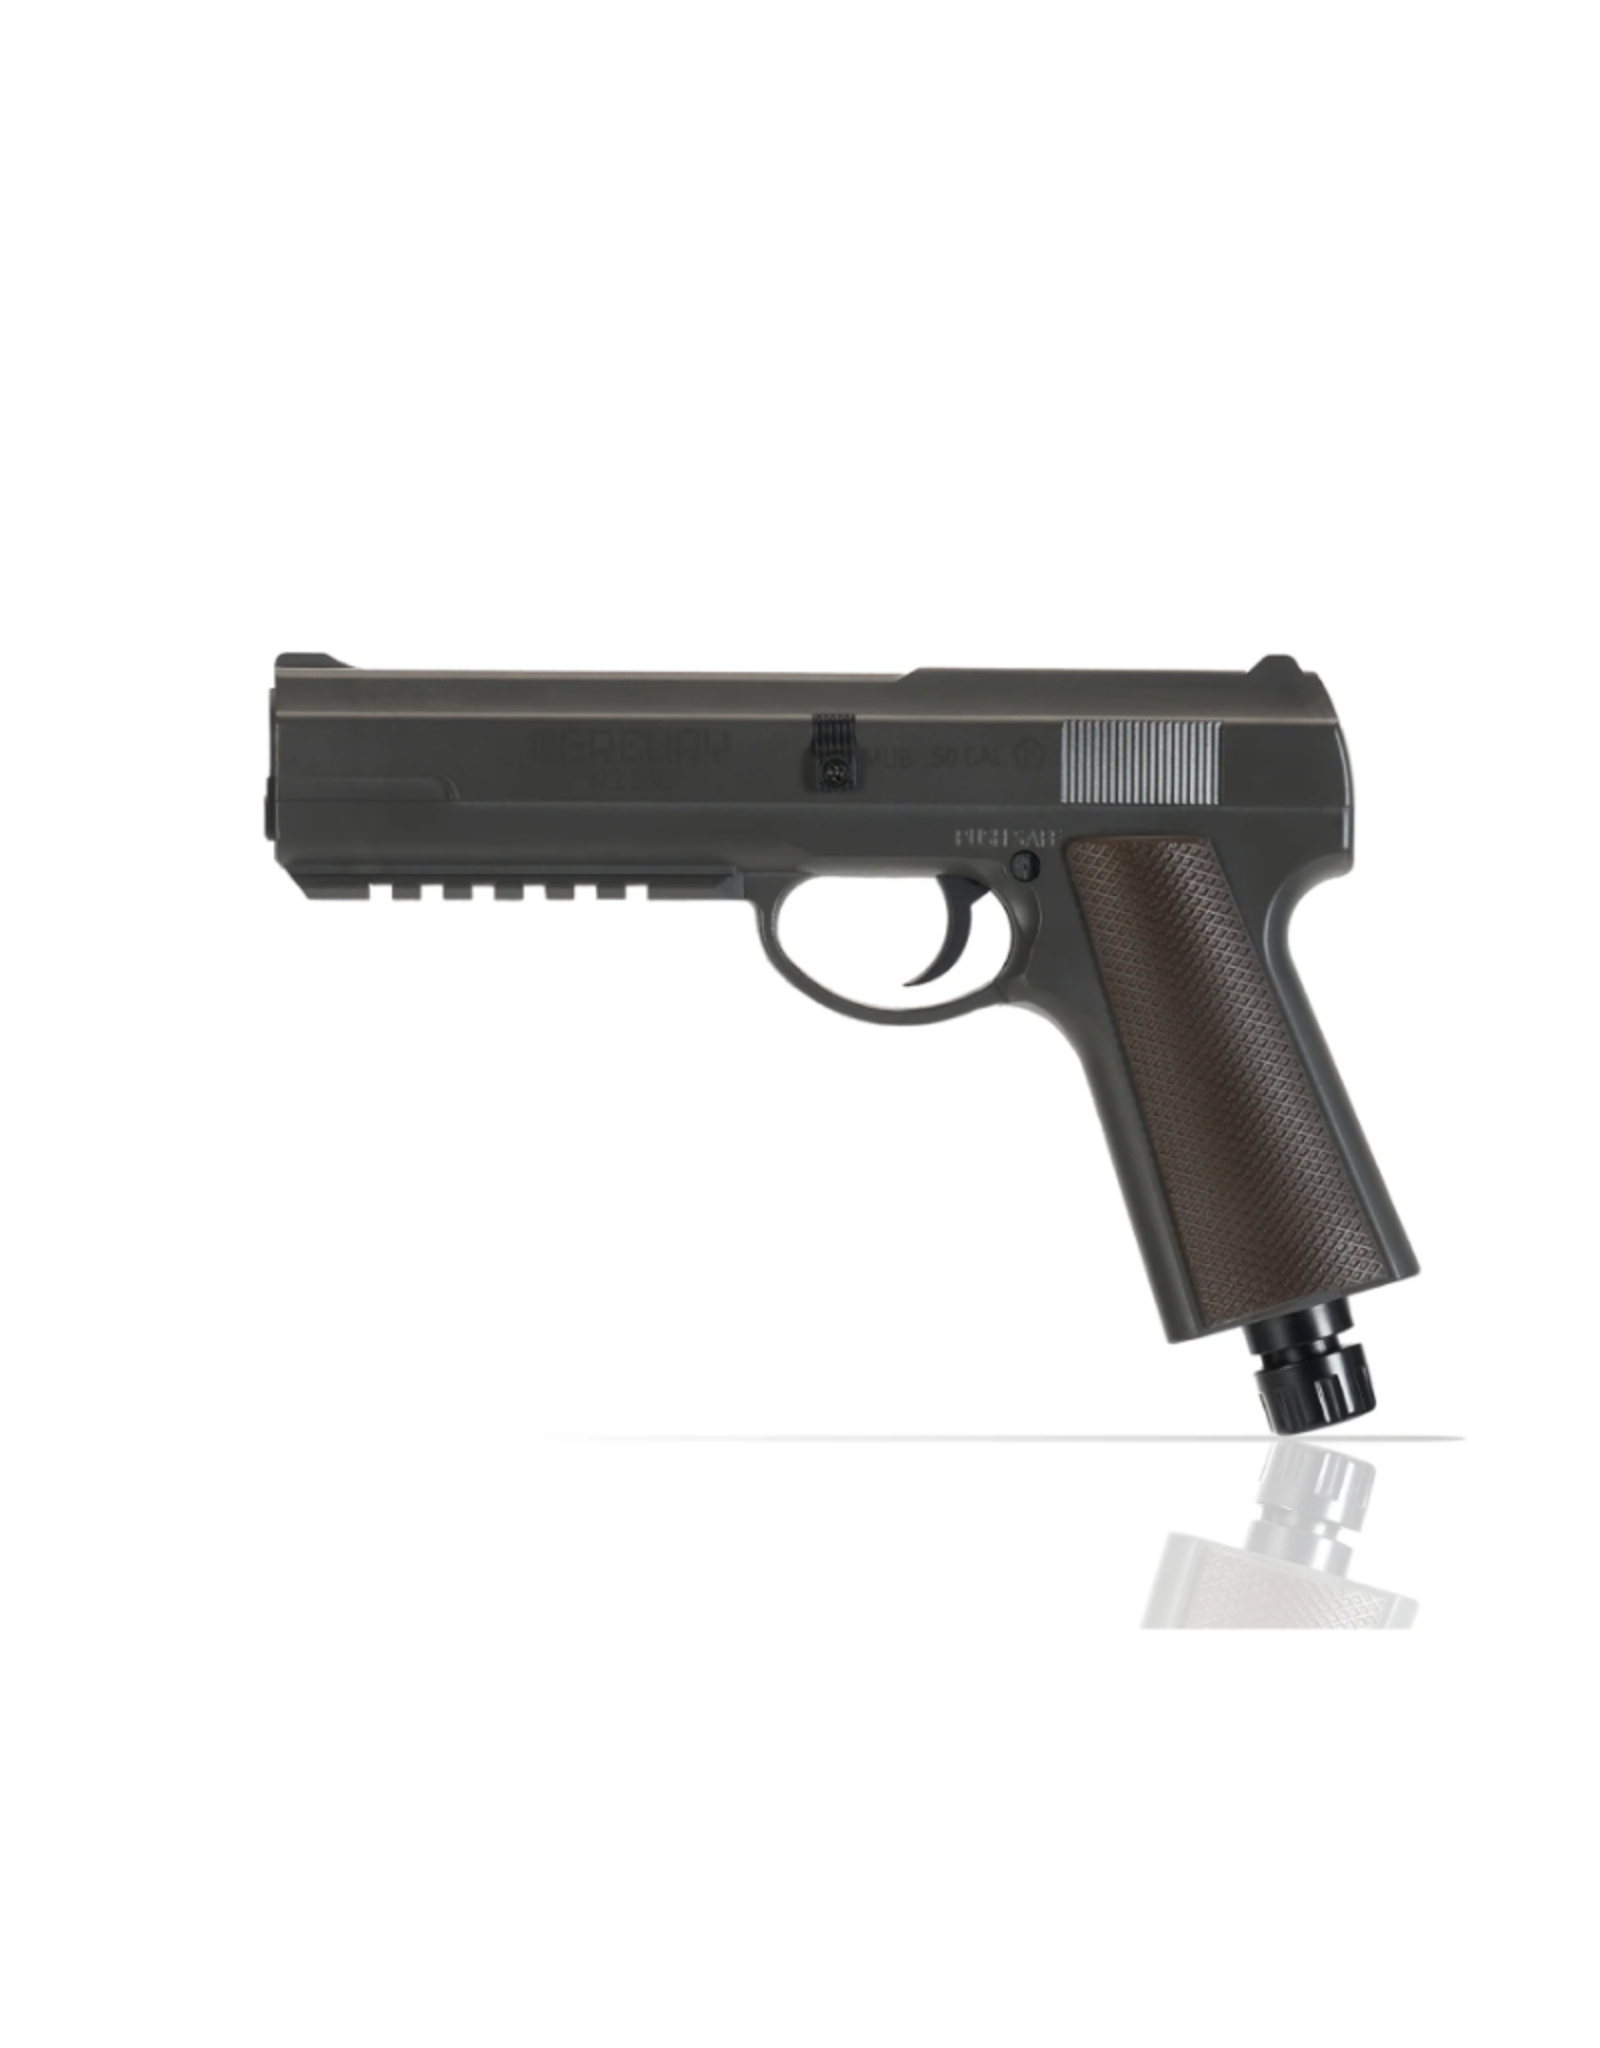 Mercury Rise Mercury Rise MUB .50 Caliber Non Blowback Training Pistol Paintball Gun Marker